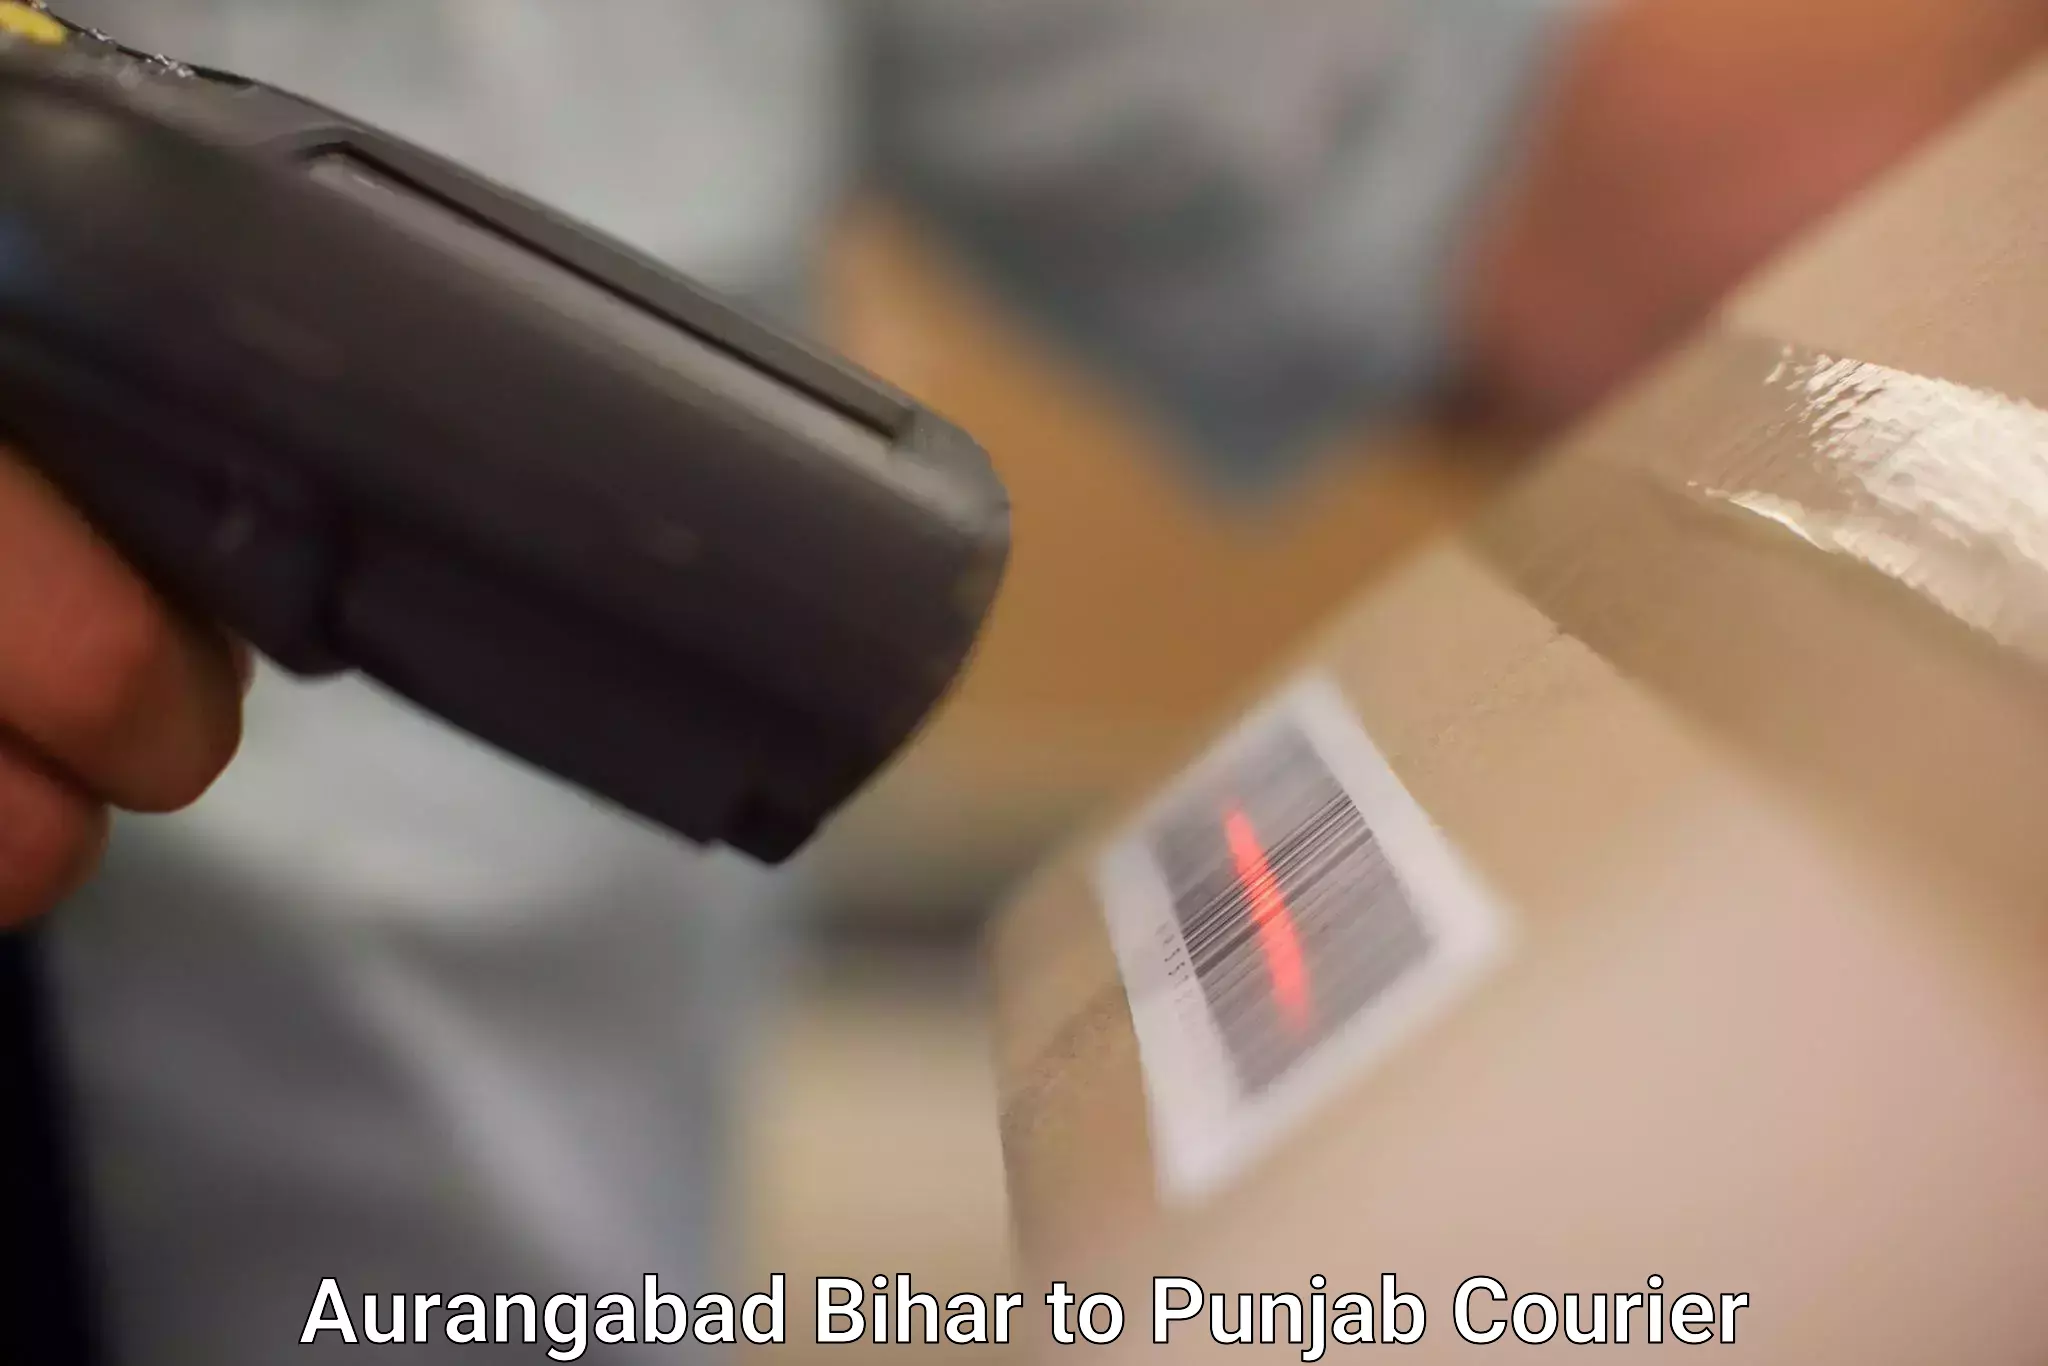 Large package courier Aurangabad Bihar to Amritsar